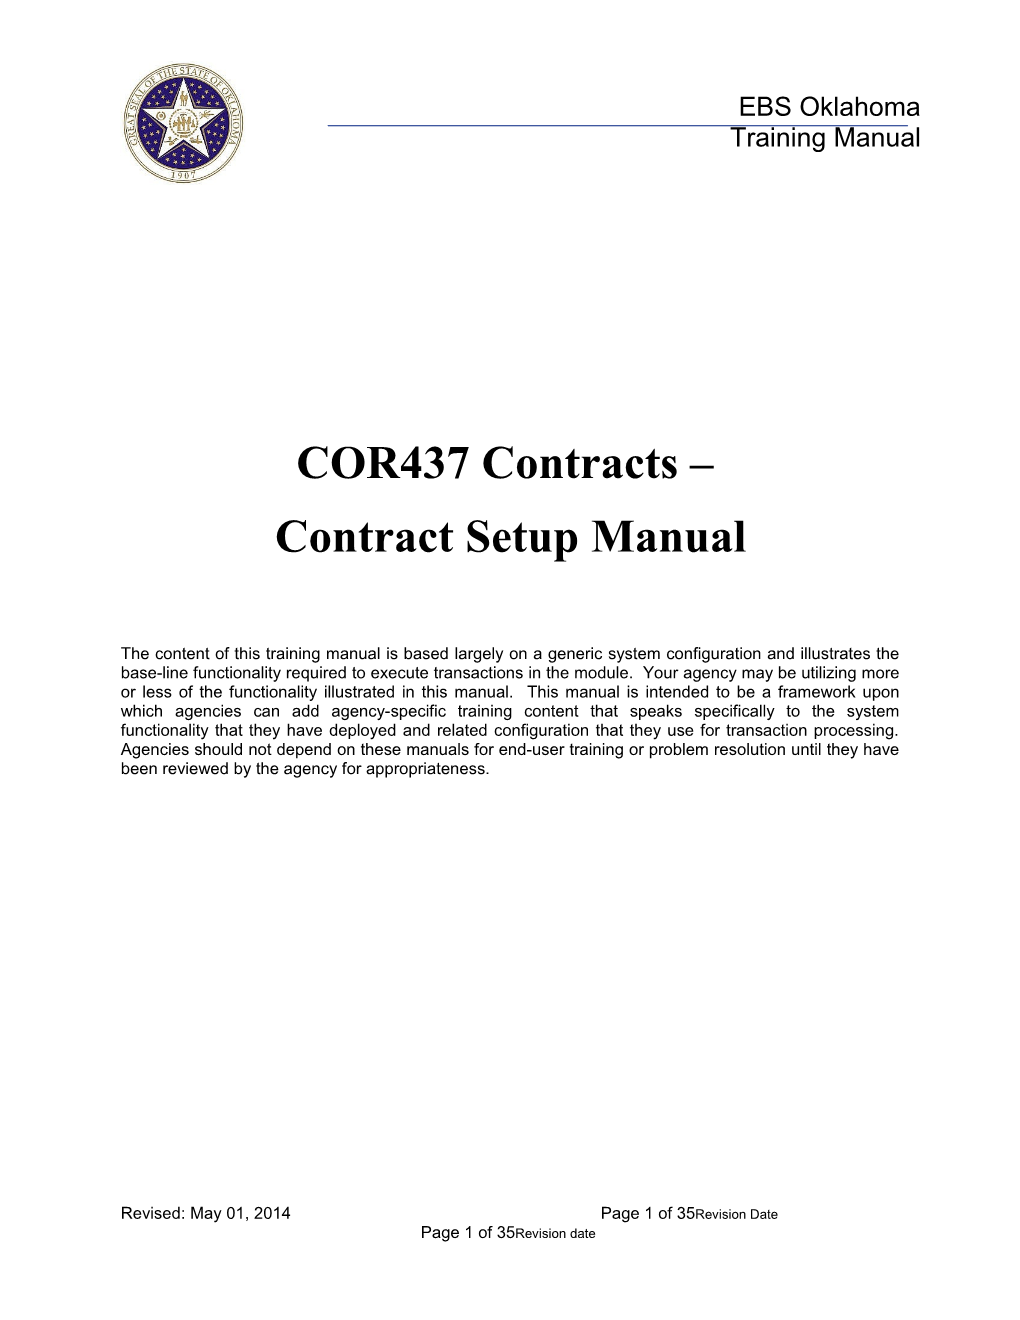 Contract Setup Manual